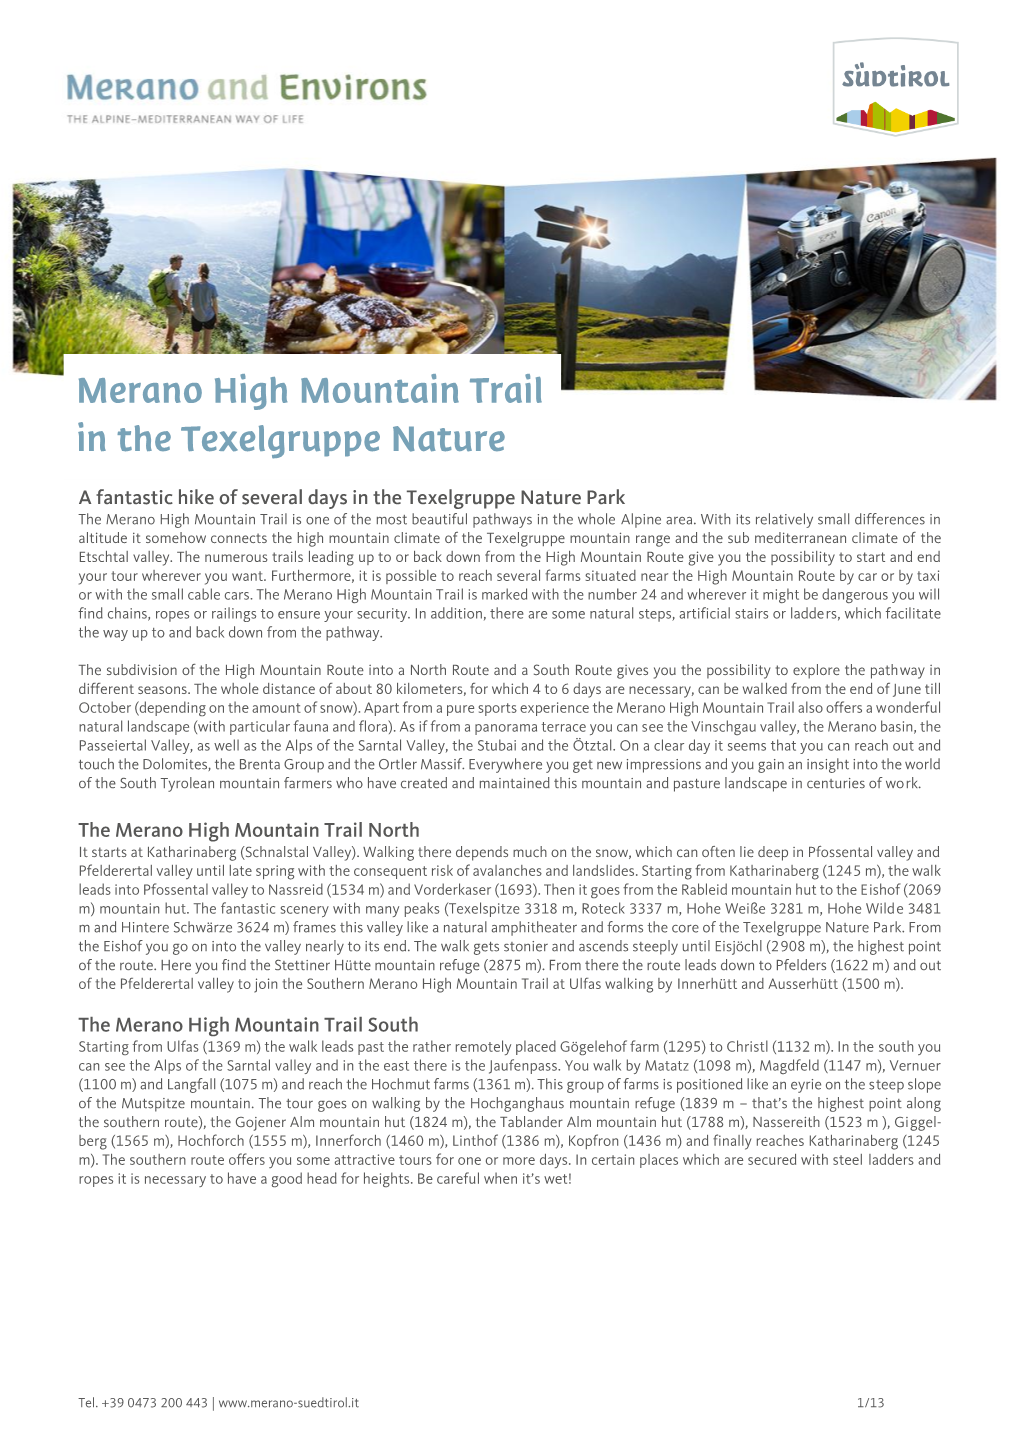 Merano High Mountain Trail in the Texelgruppe Nature Park